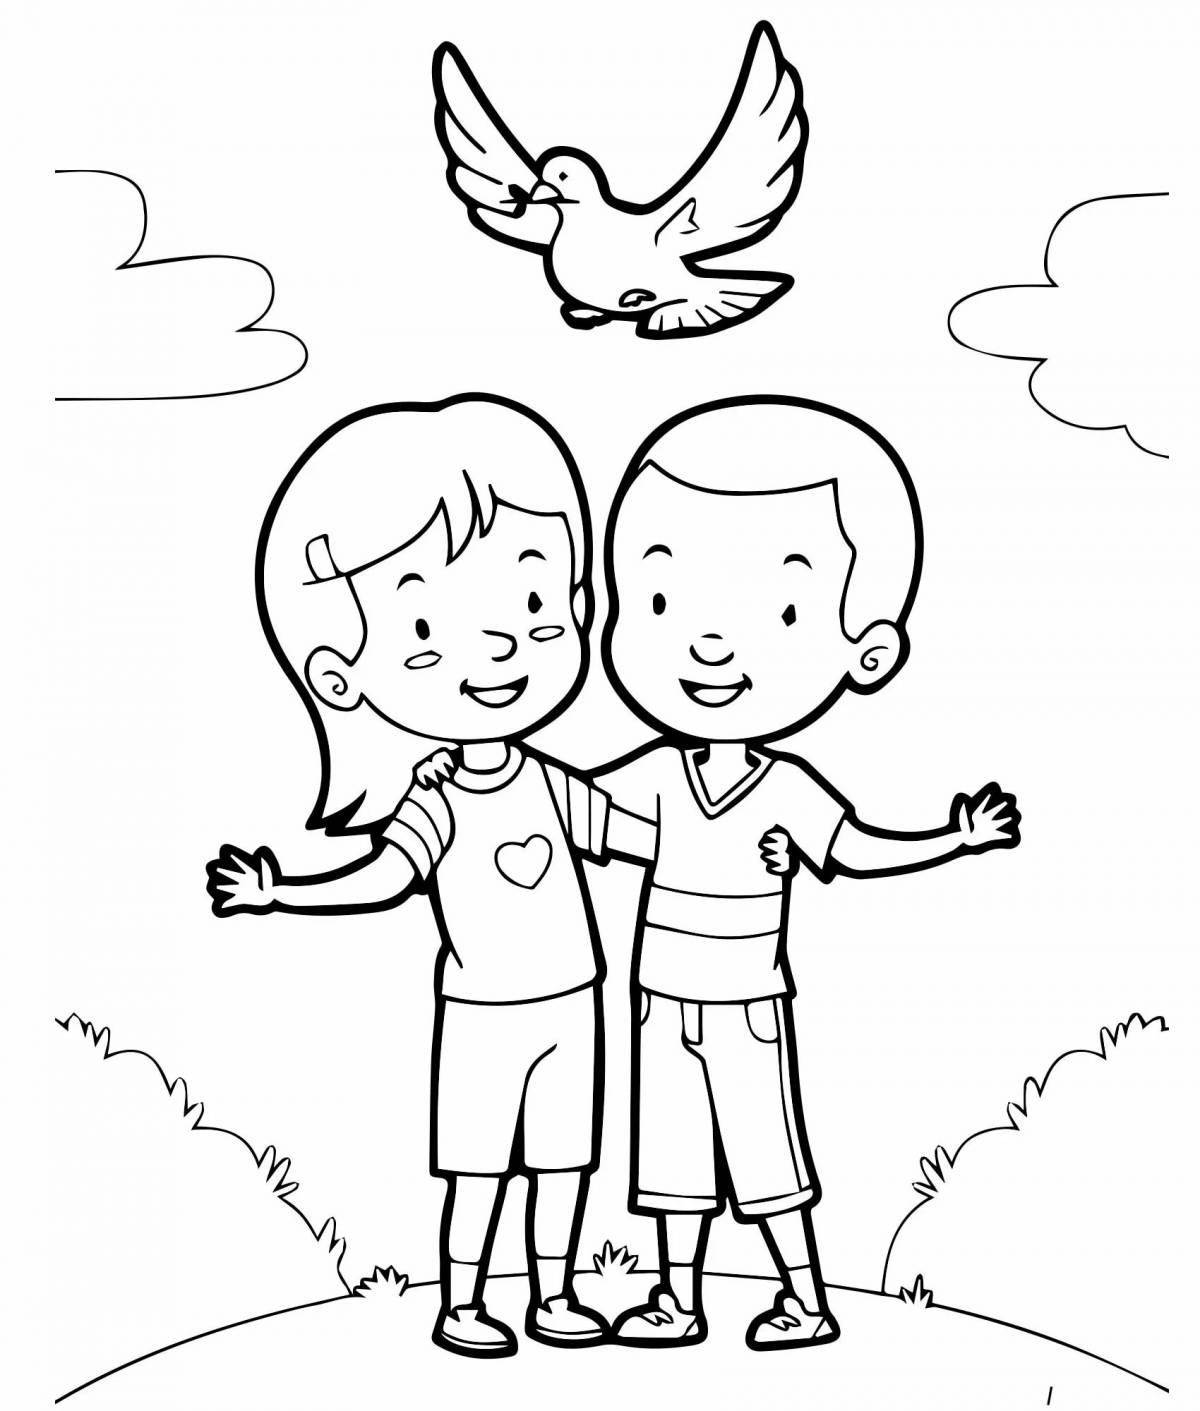 Harmonious friendship coloring page